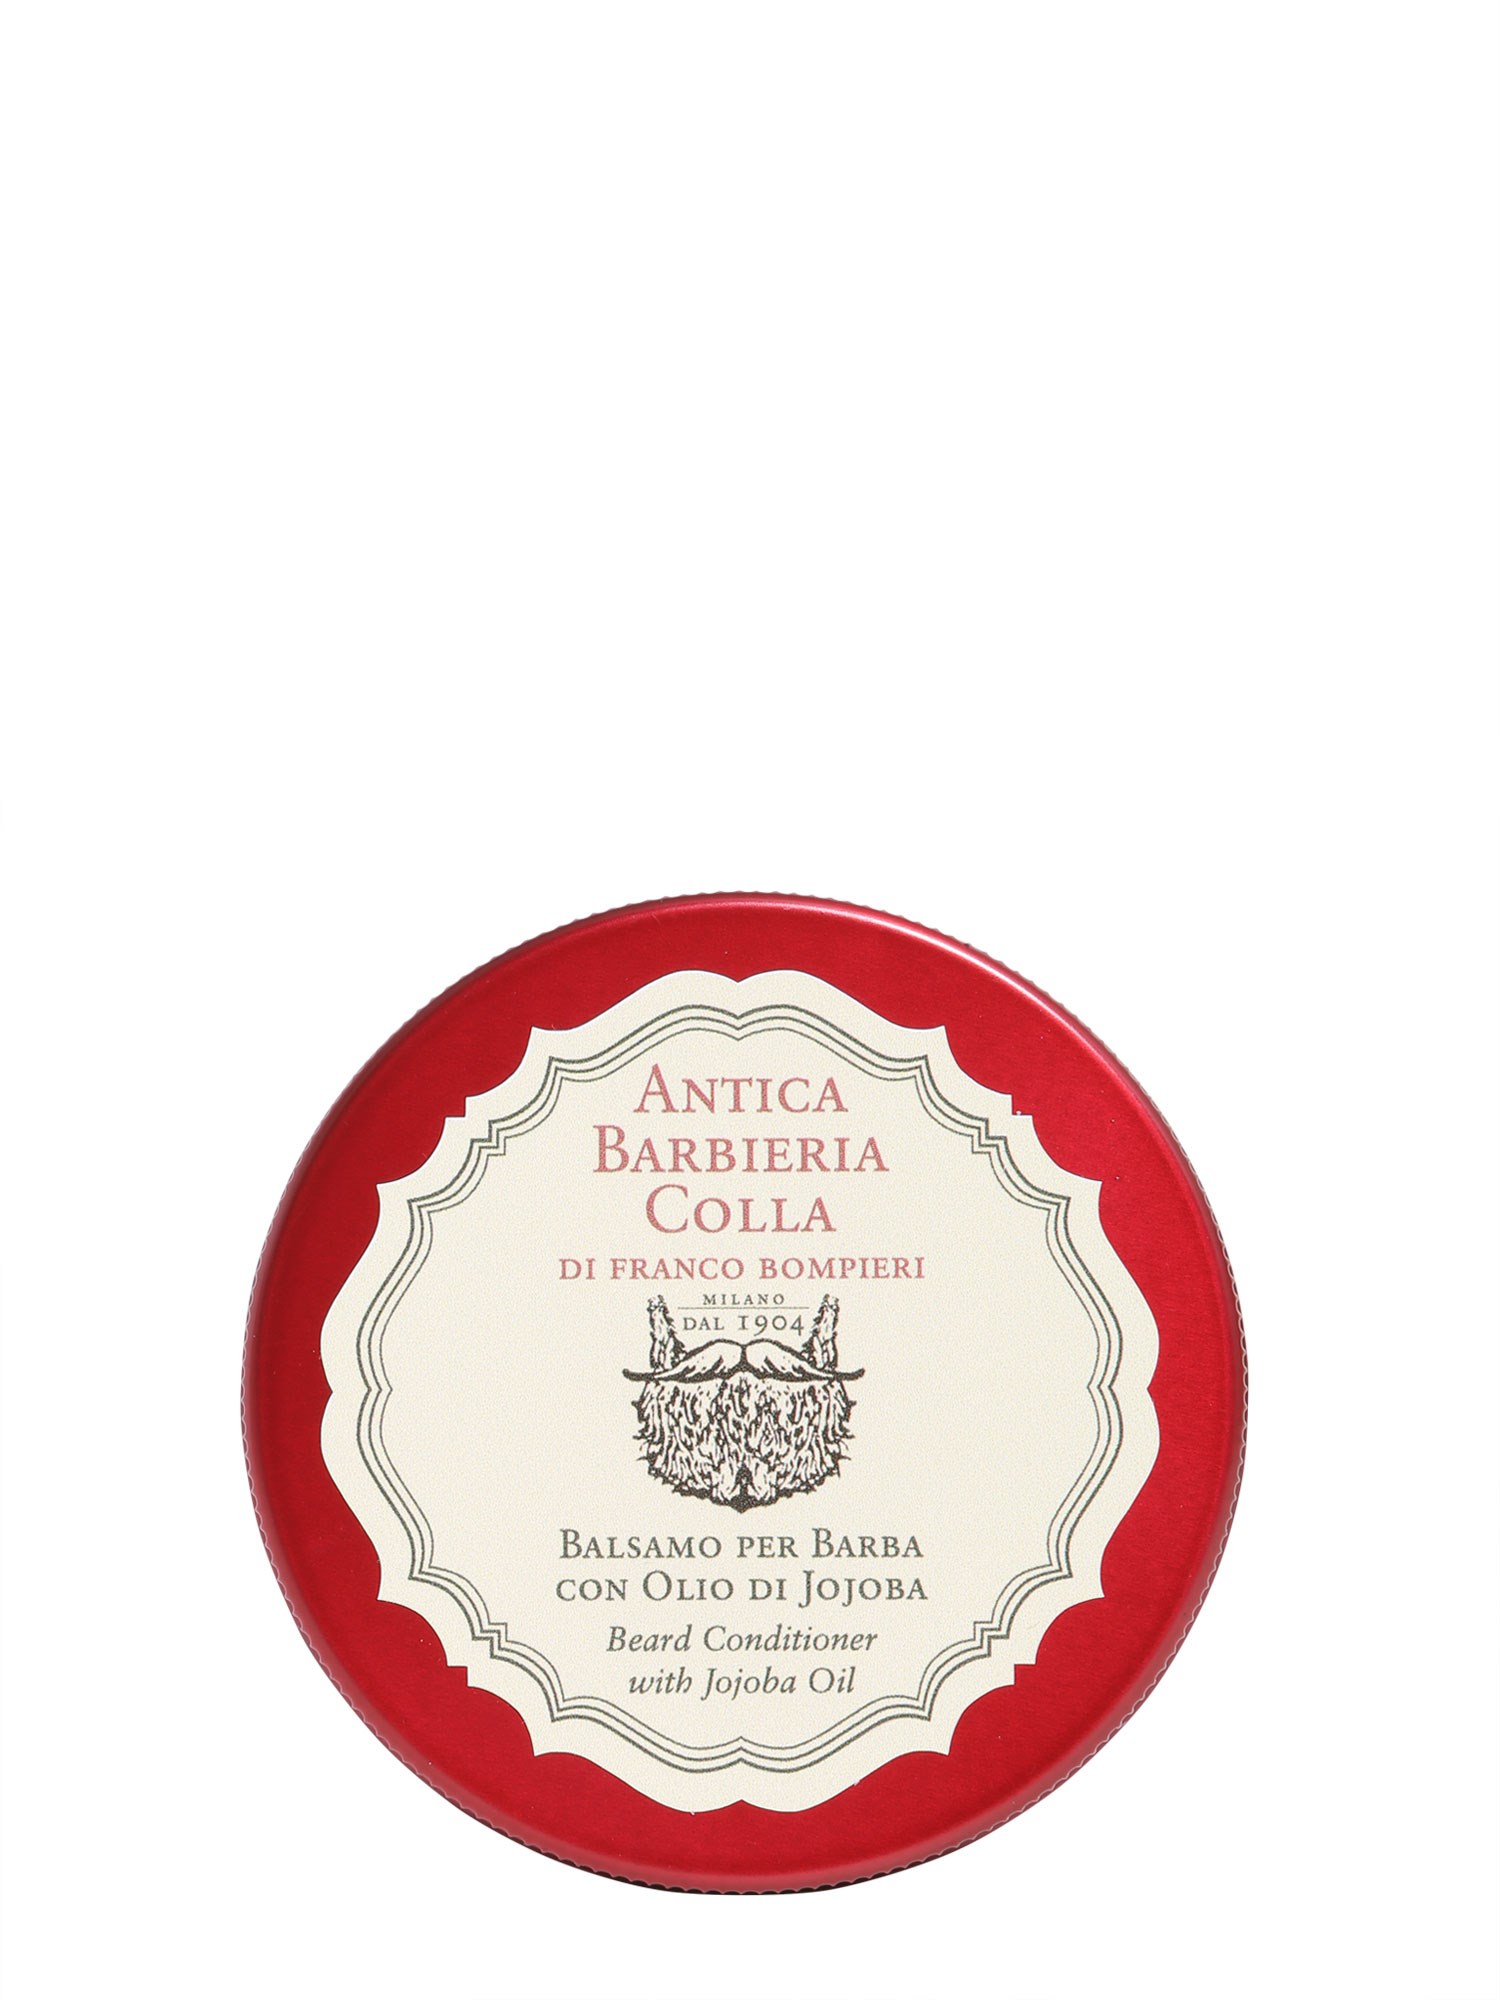 antica barbieria colla beard conditioner with jojoba oil